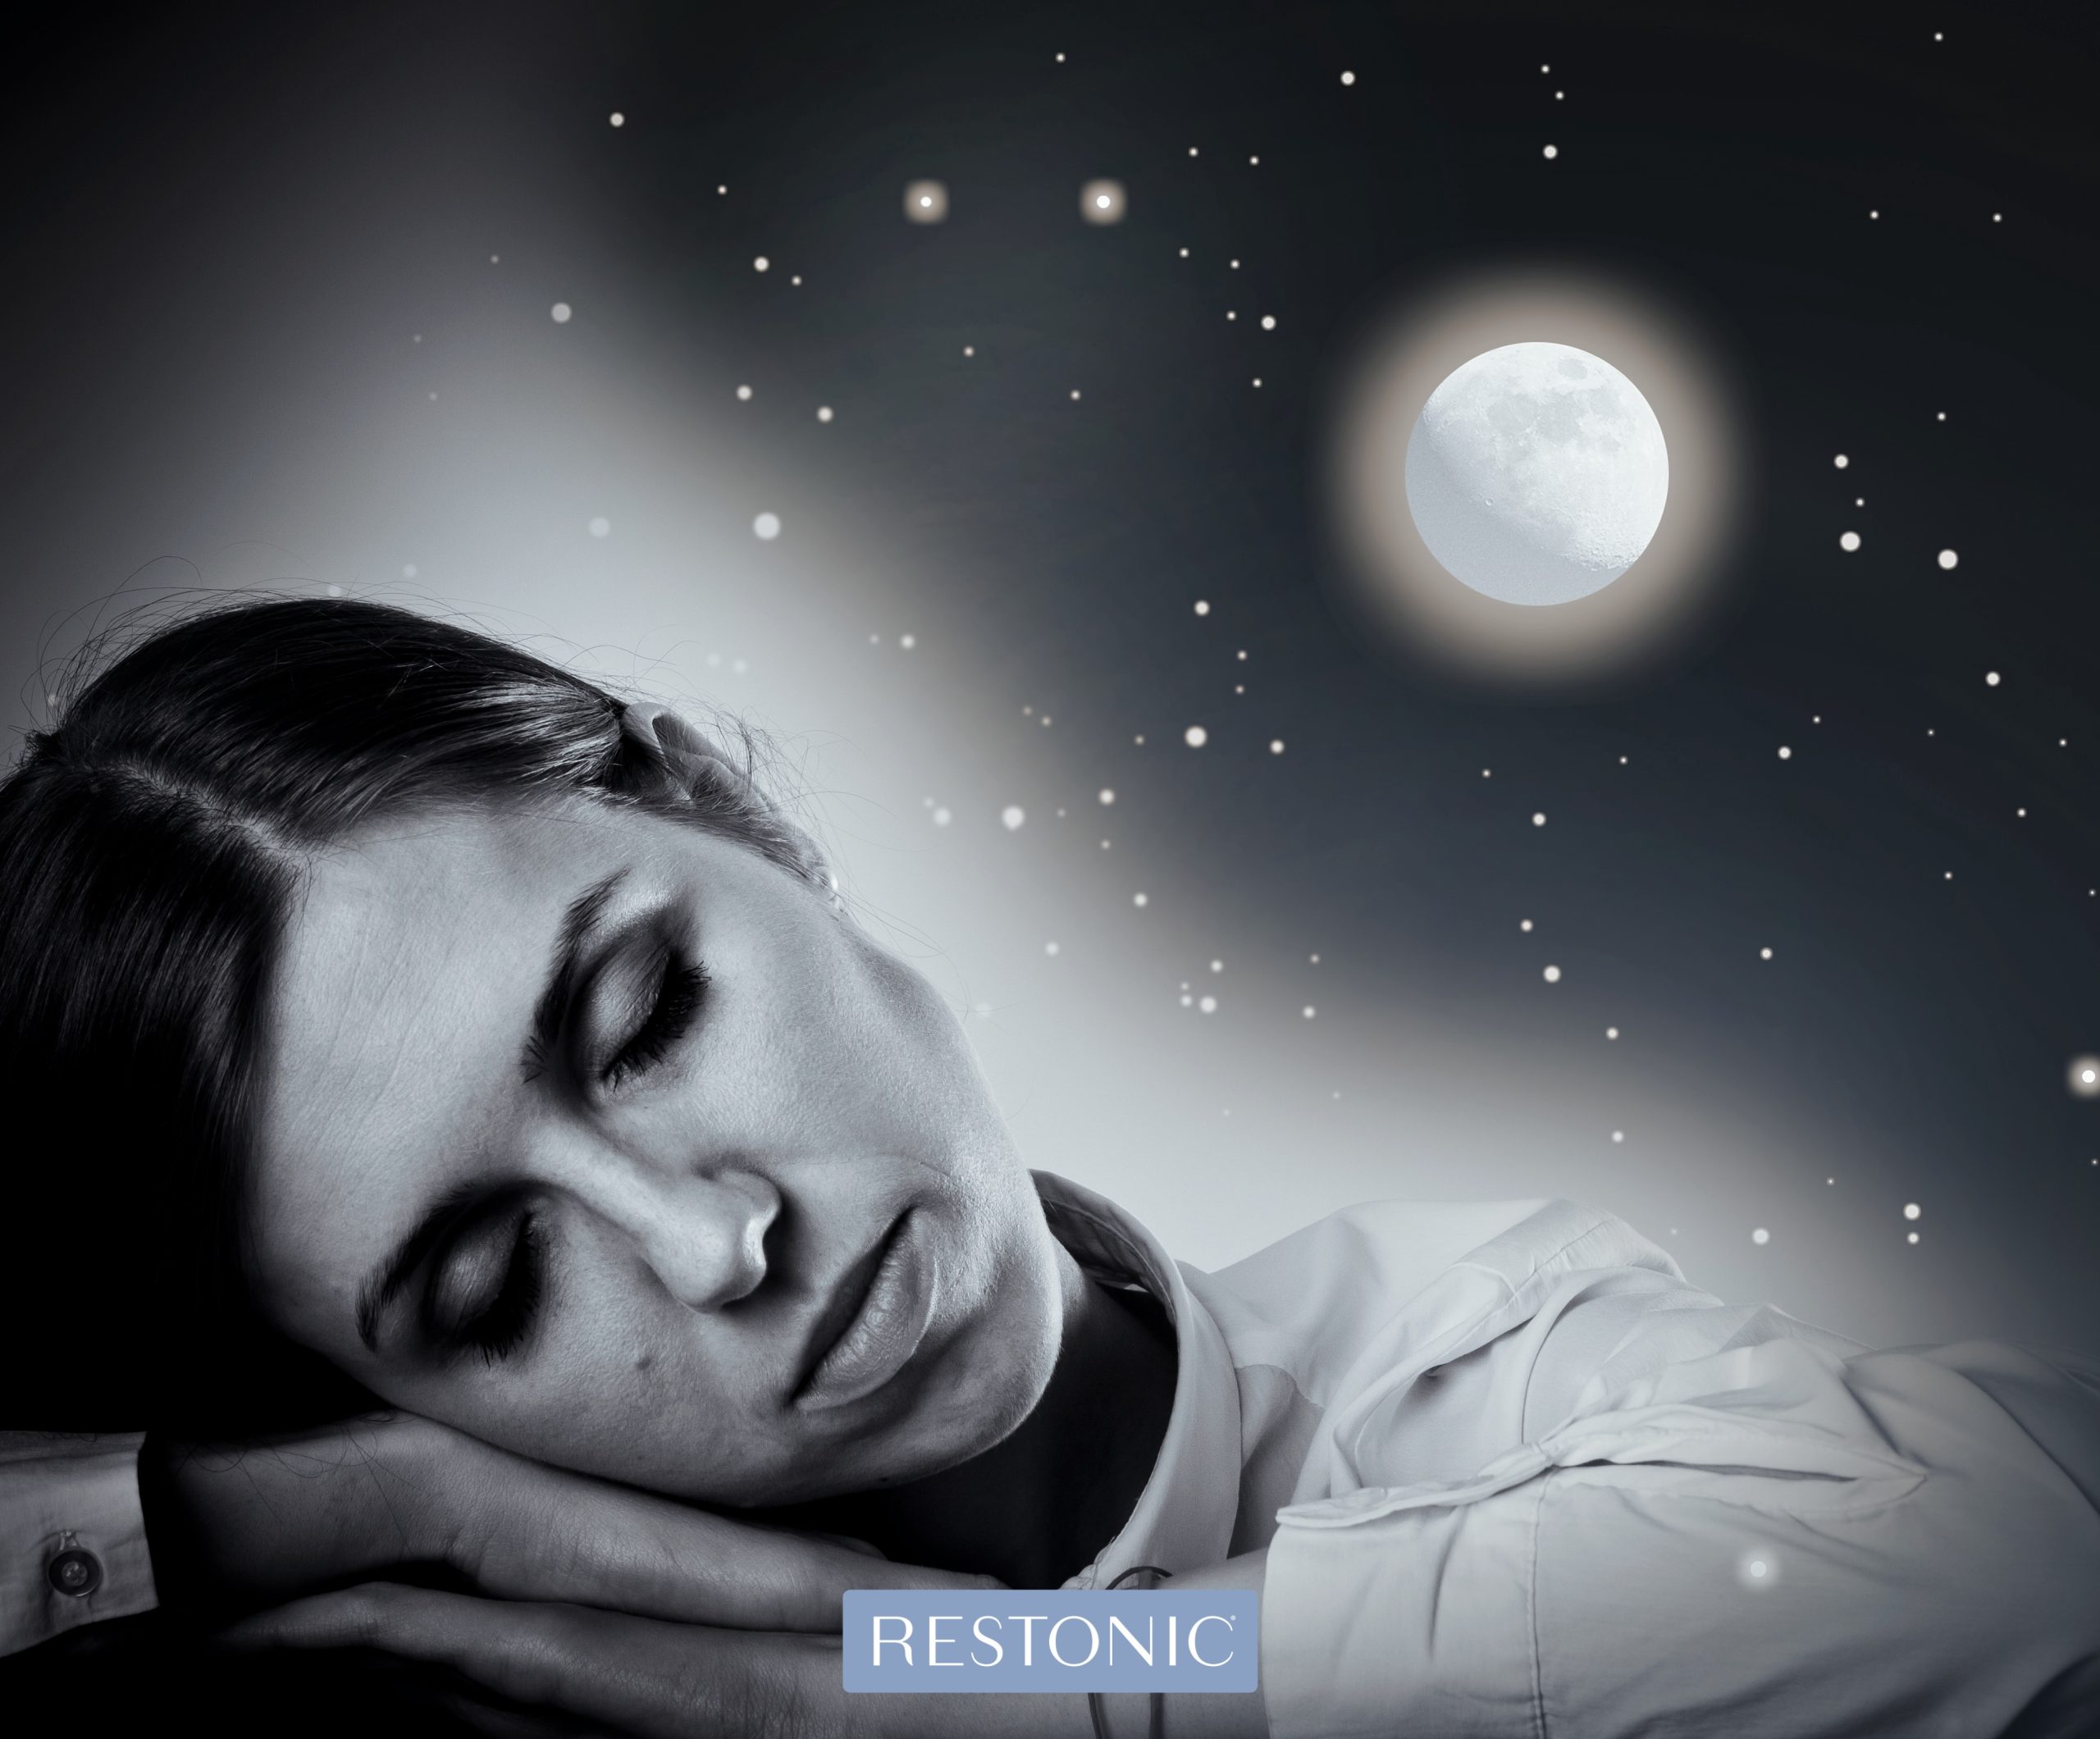 Can’t sleep? Blame it on the Full Moon! 